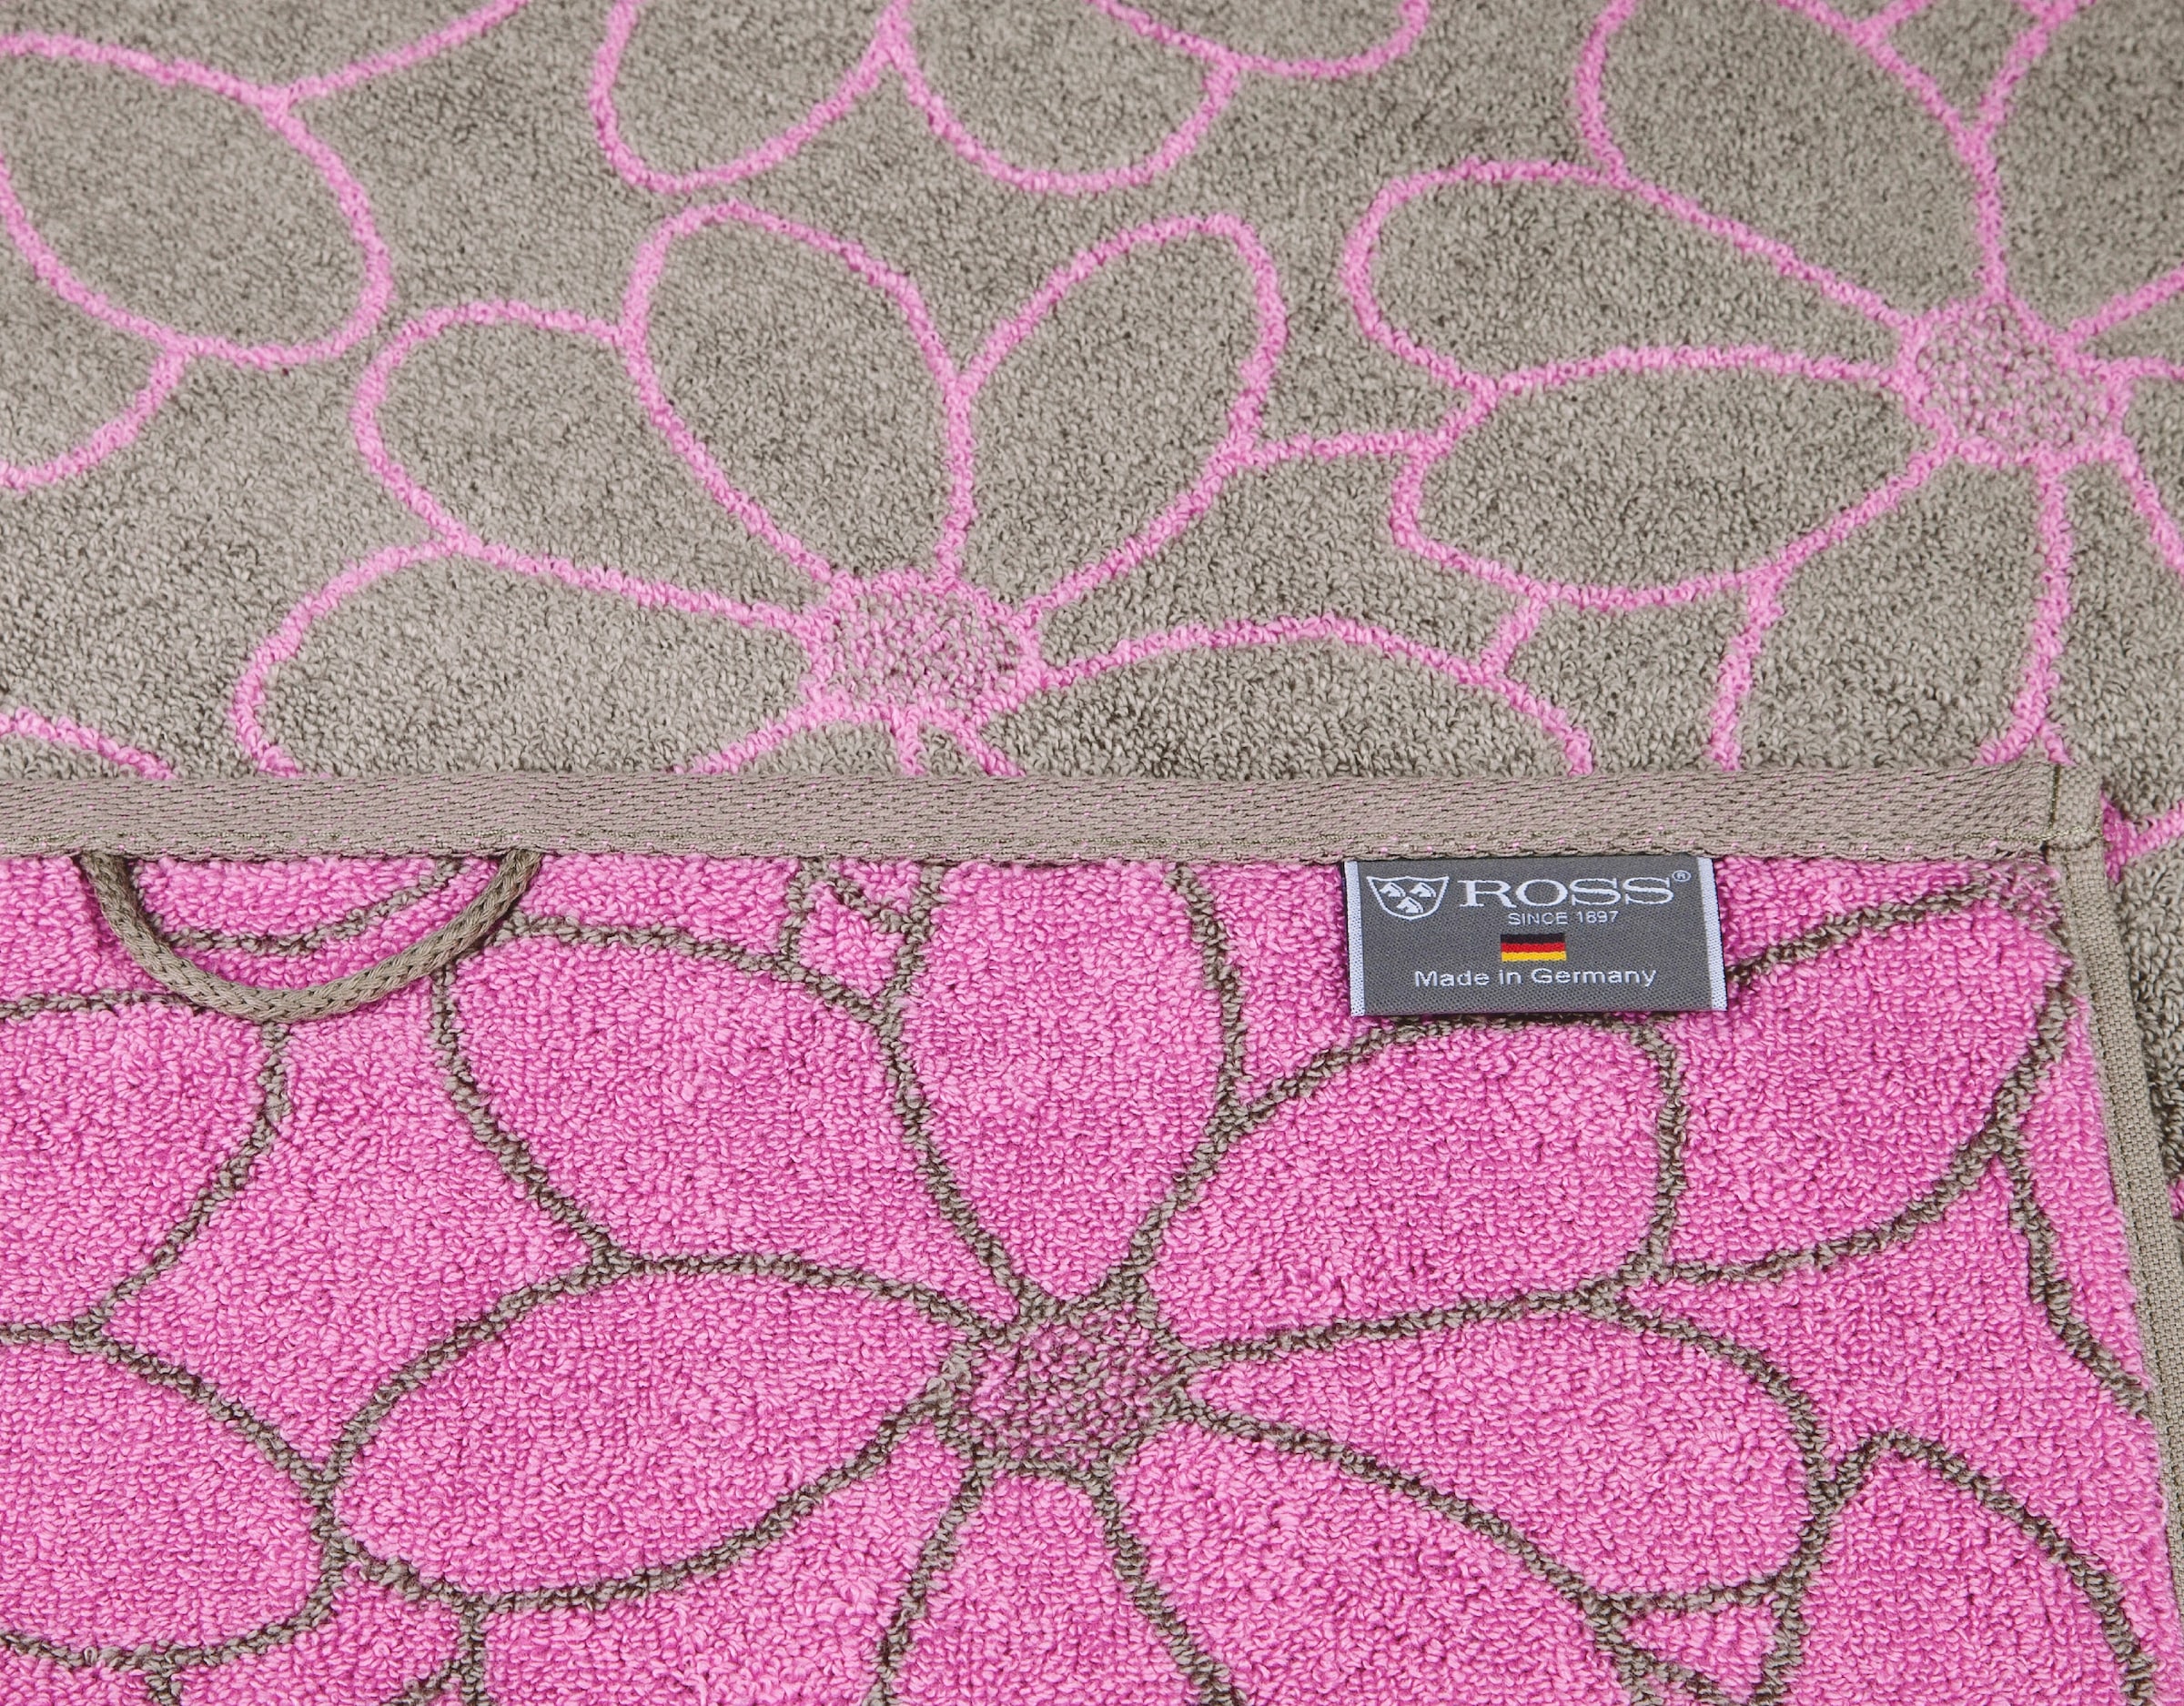 ROSS Badetuch »Blütenfond«, (1 St.), aus feinster Mako-Baumwolle bei OTTO